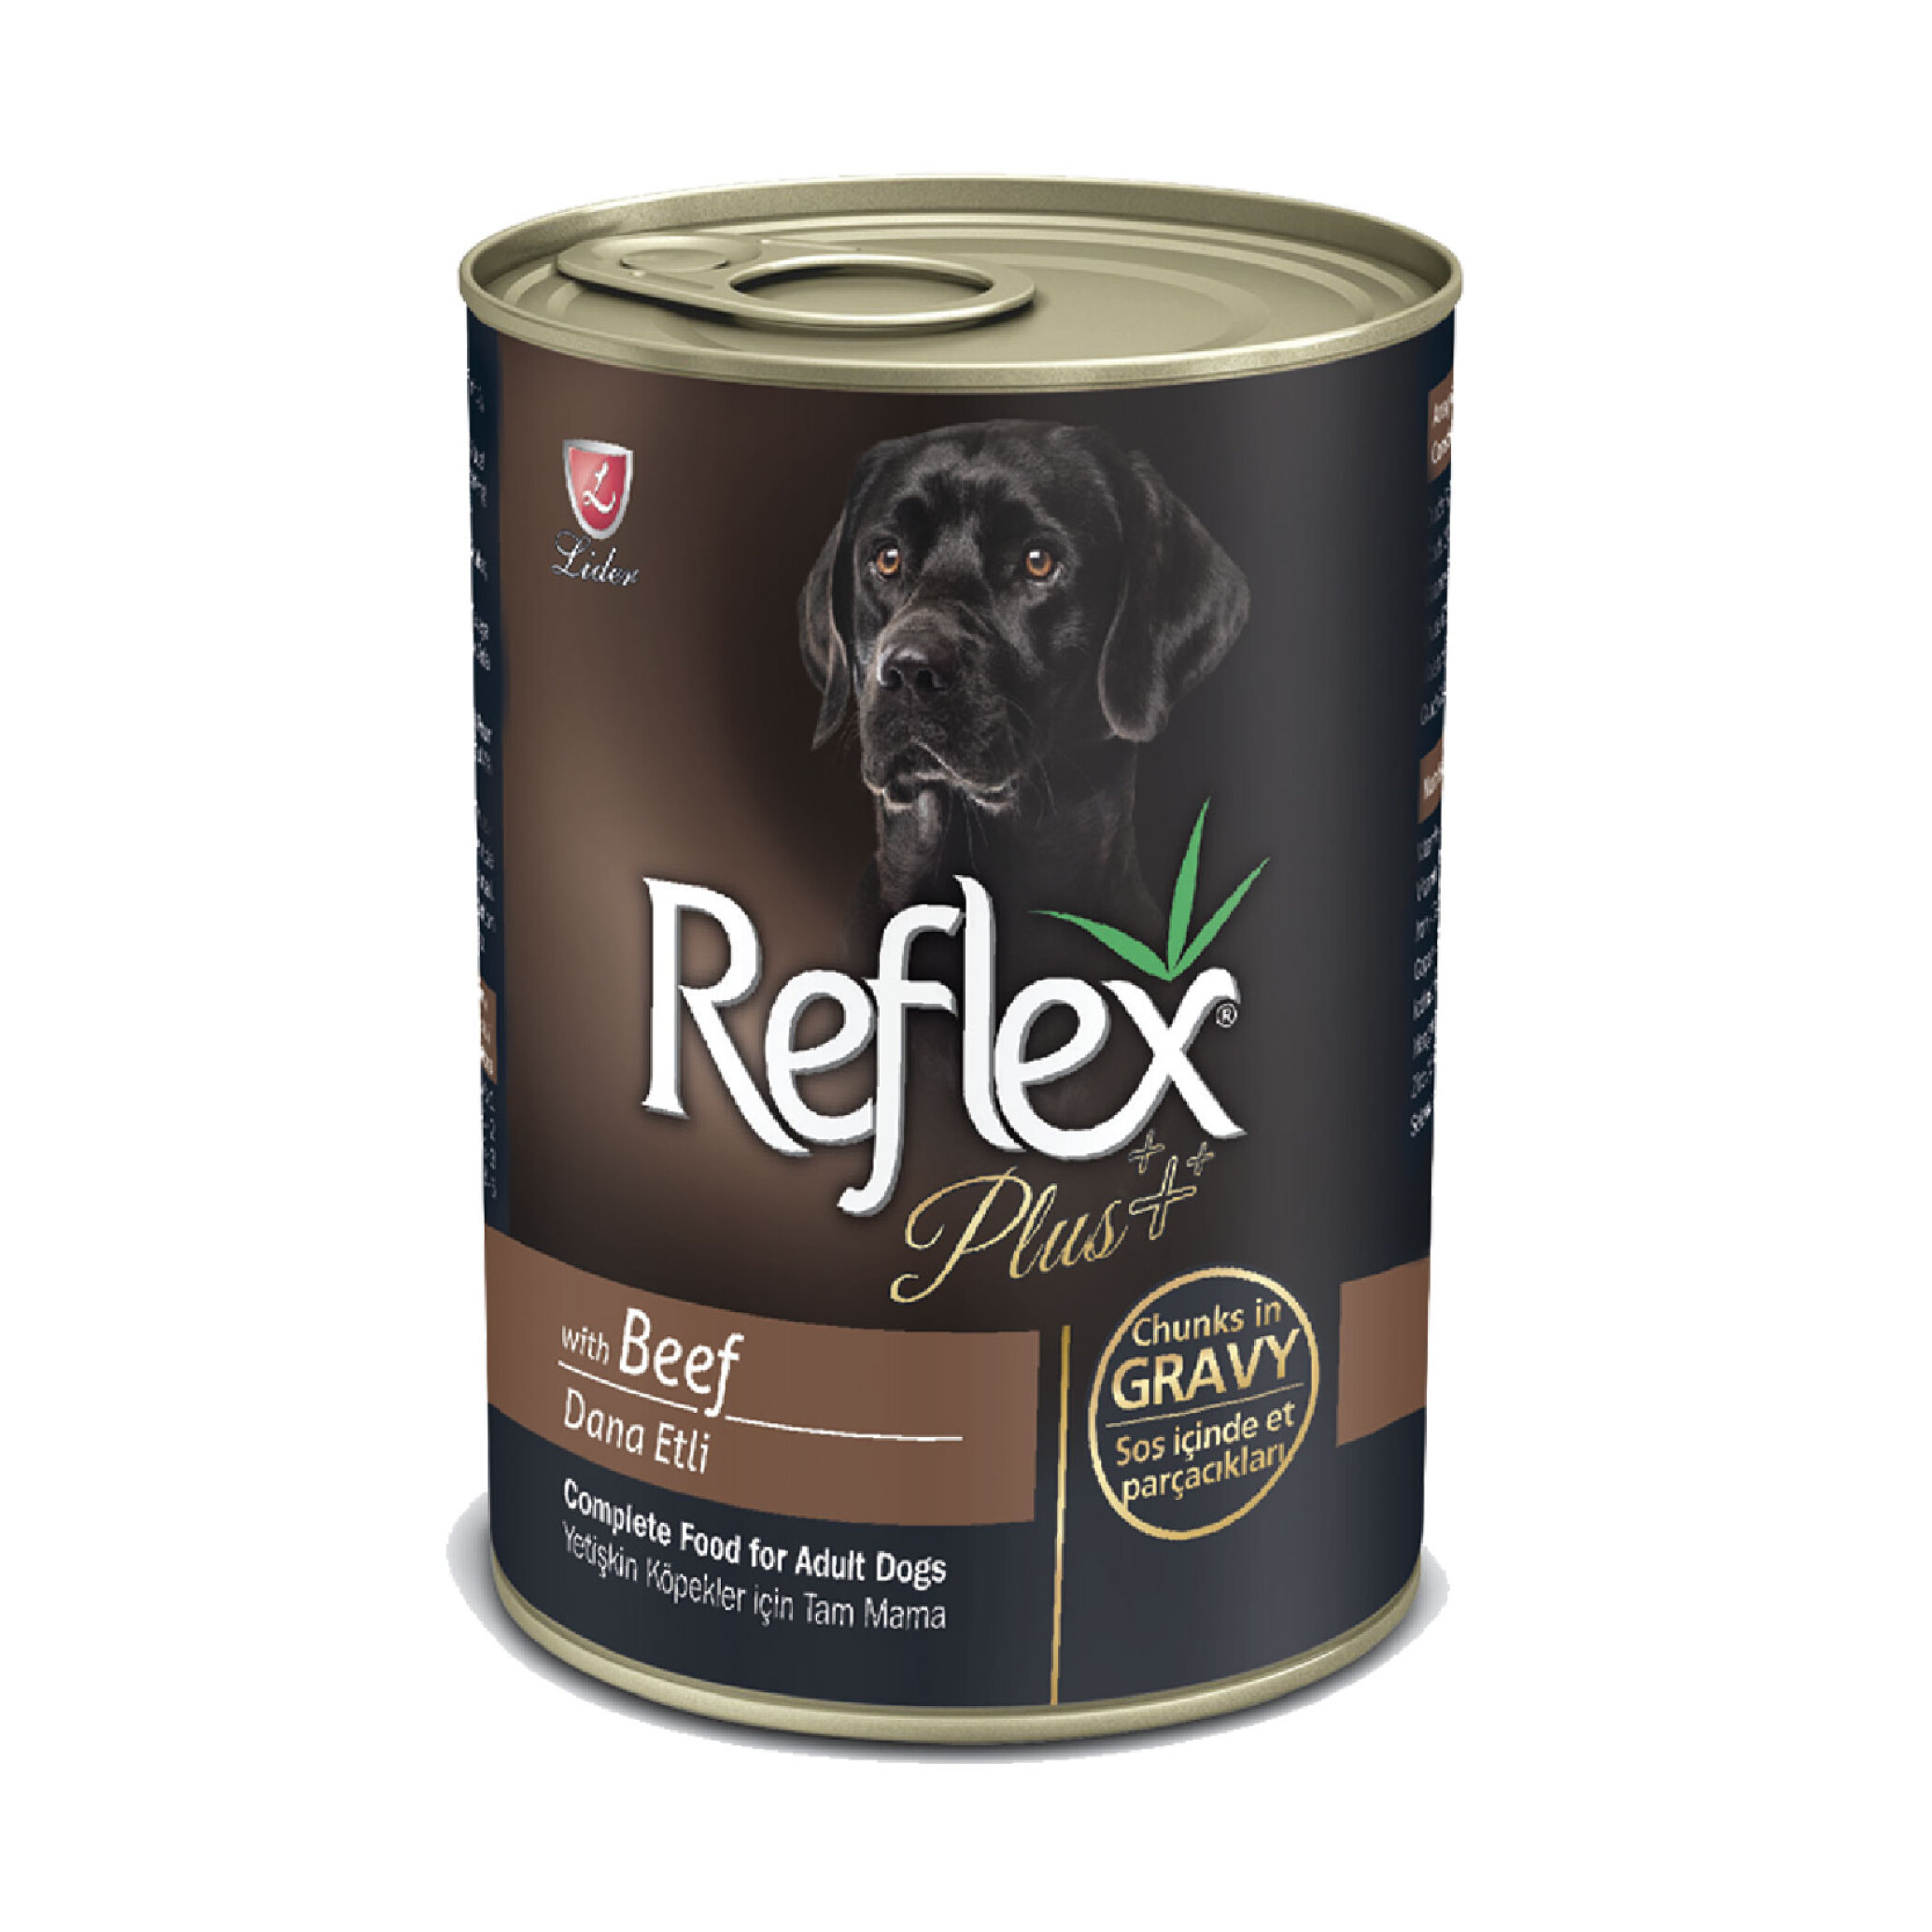  تصویر کنسرو غذای سگ رفلکس پلاس Reflex Plus Beef Chunk in Gravy وزن 400 گرم 